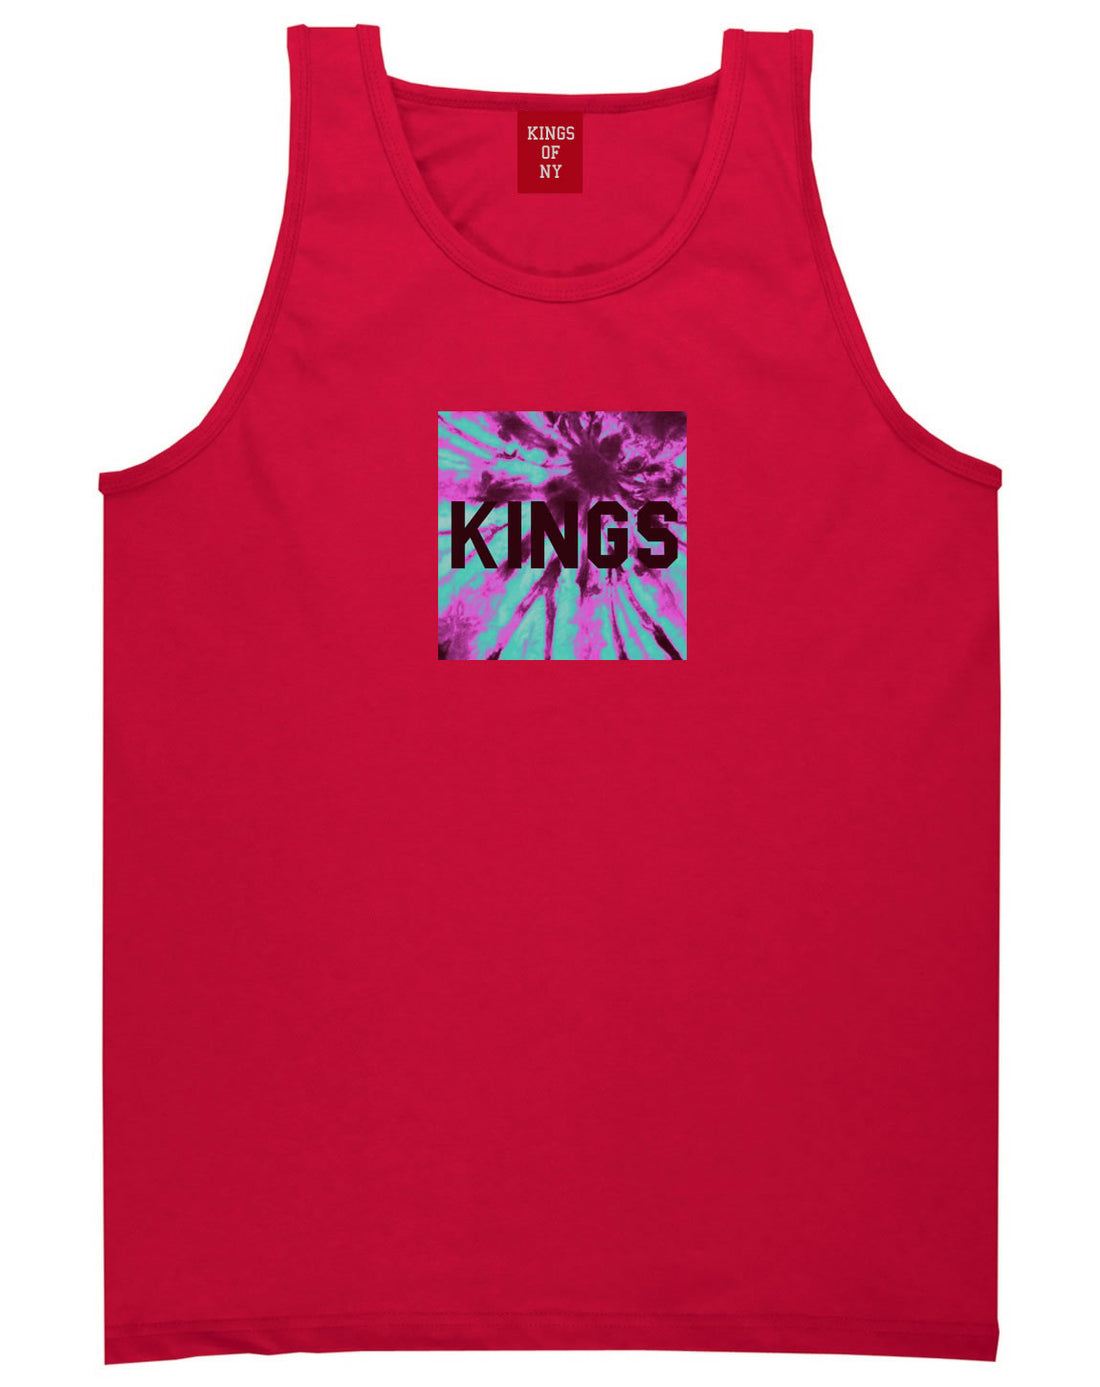 Kings Blue Tie Dye Box Logo Tank Top in Red By Kings Of NY